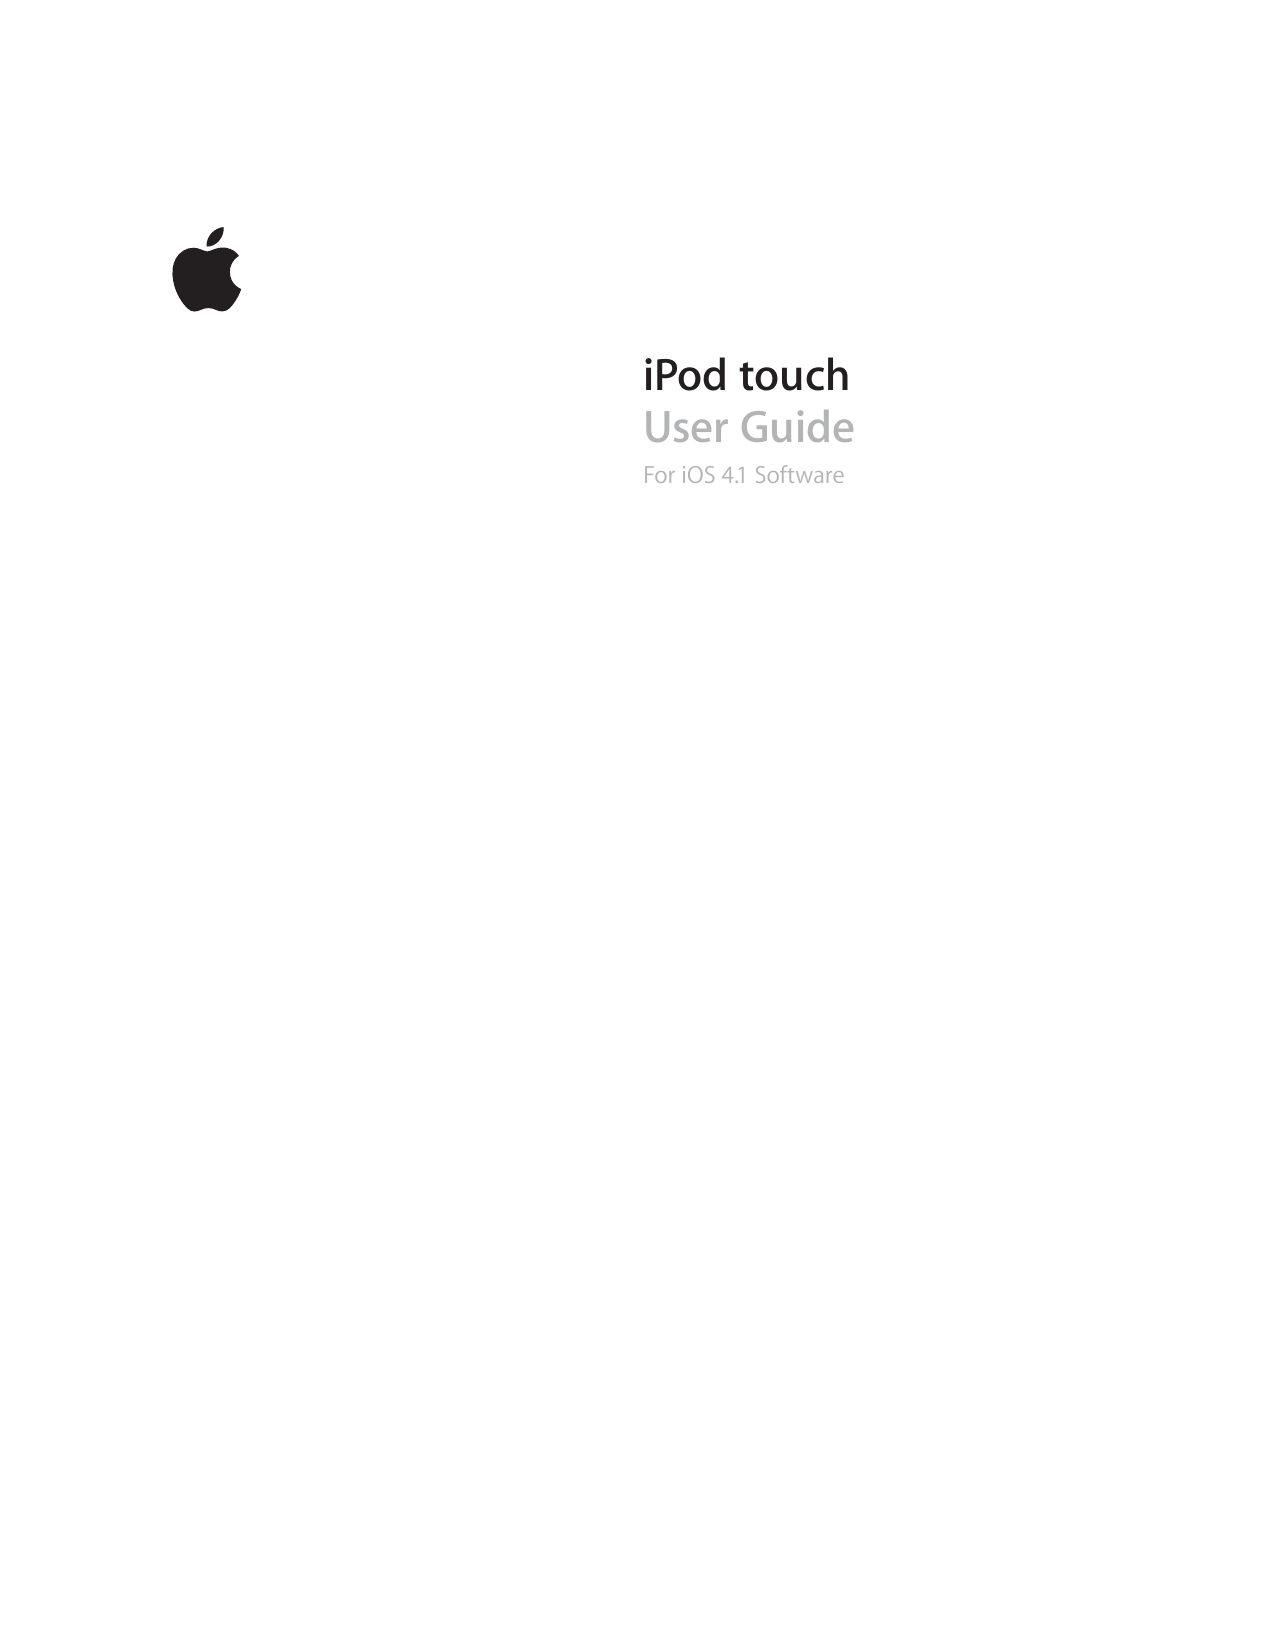 iPod touchUser GuideFor iOS 4.1 Software